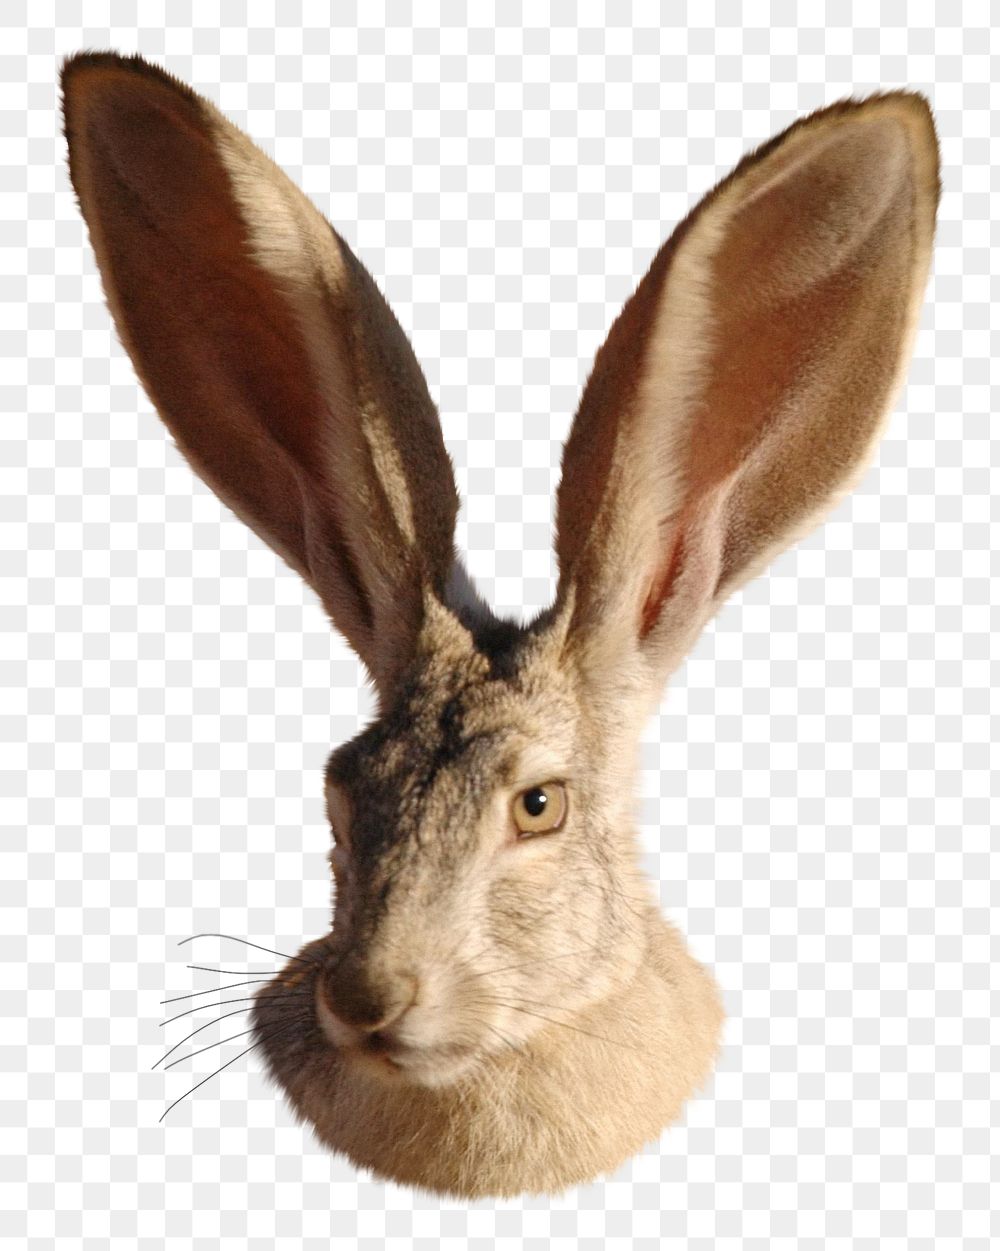 Big ears rabbit png sticker, transparent background